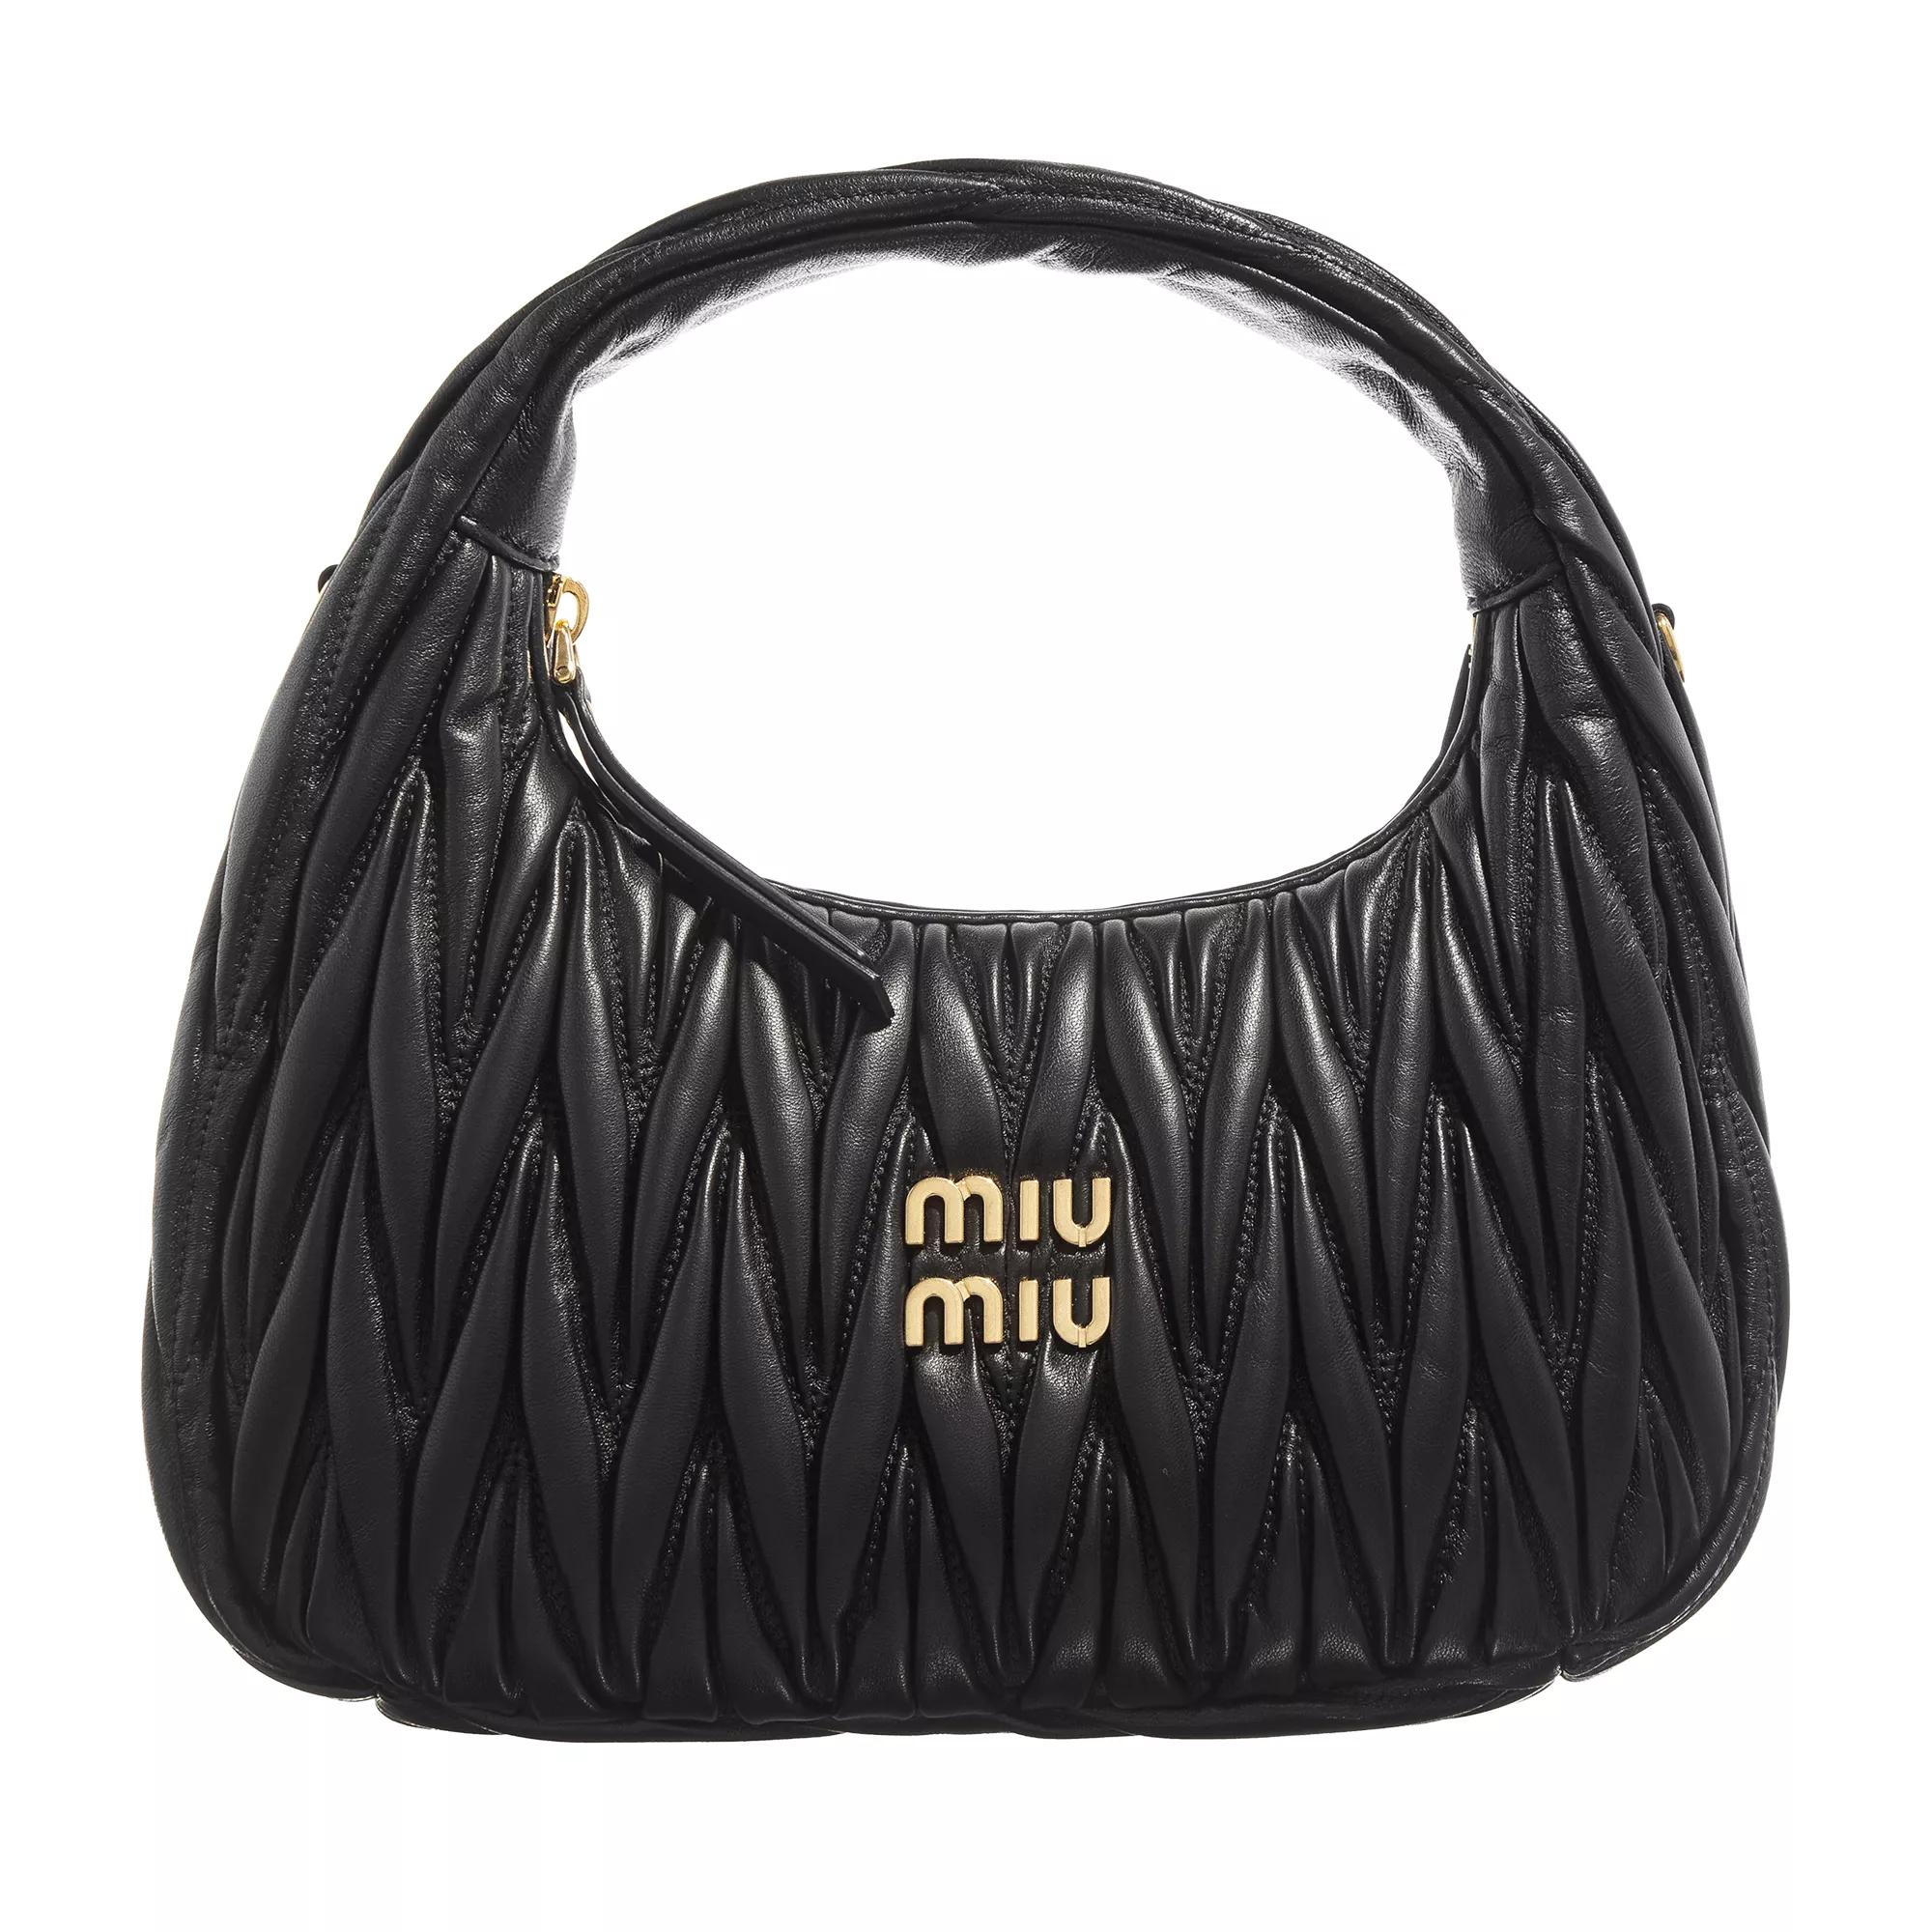 Miu Miu Wander Hobo Bag Black | Sac hobo | fashionette